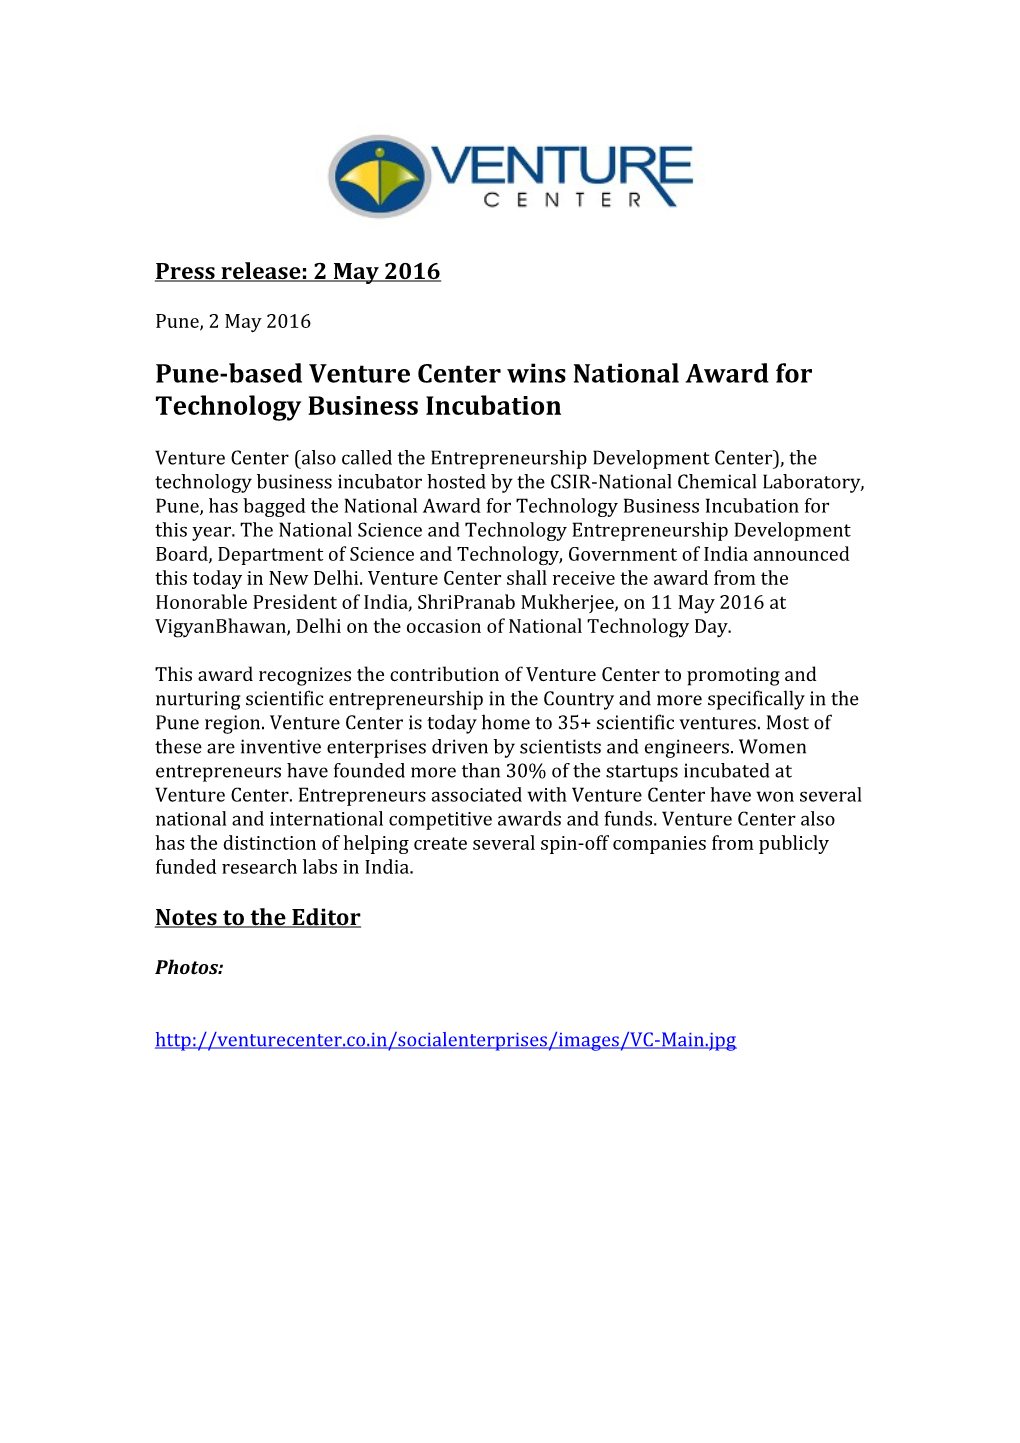 Pune-Based Venture Center Wins National Award for Technology Business Incubation